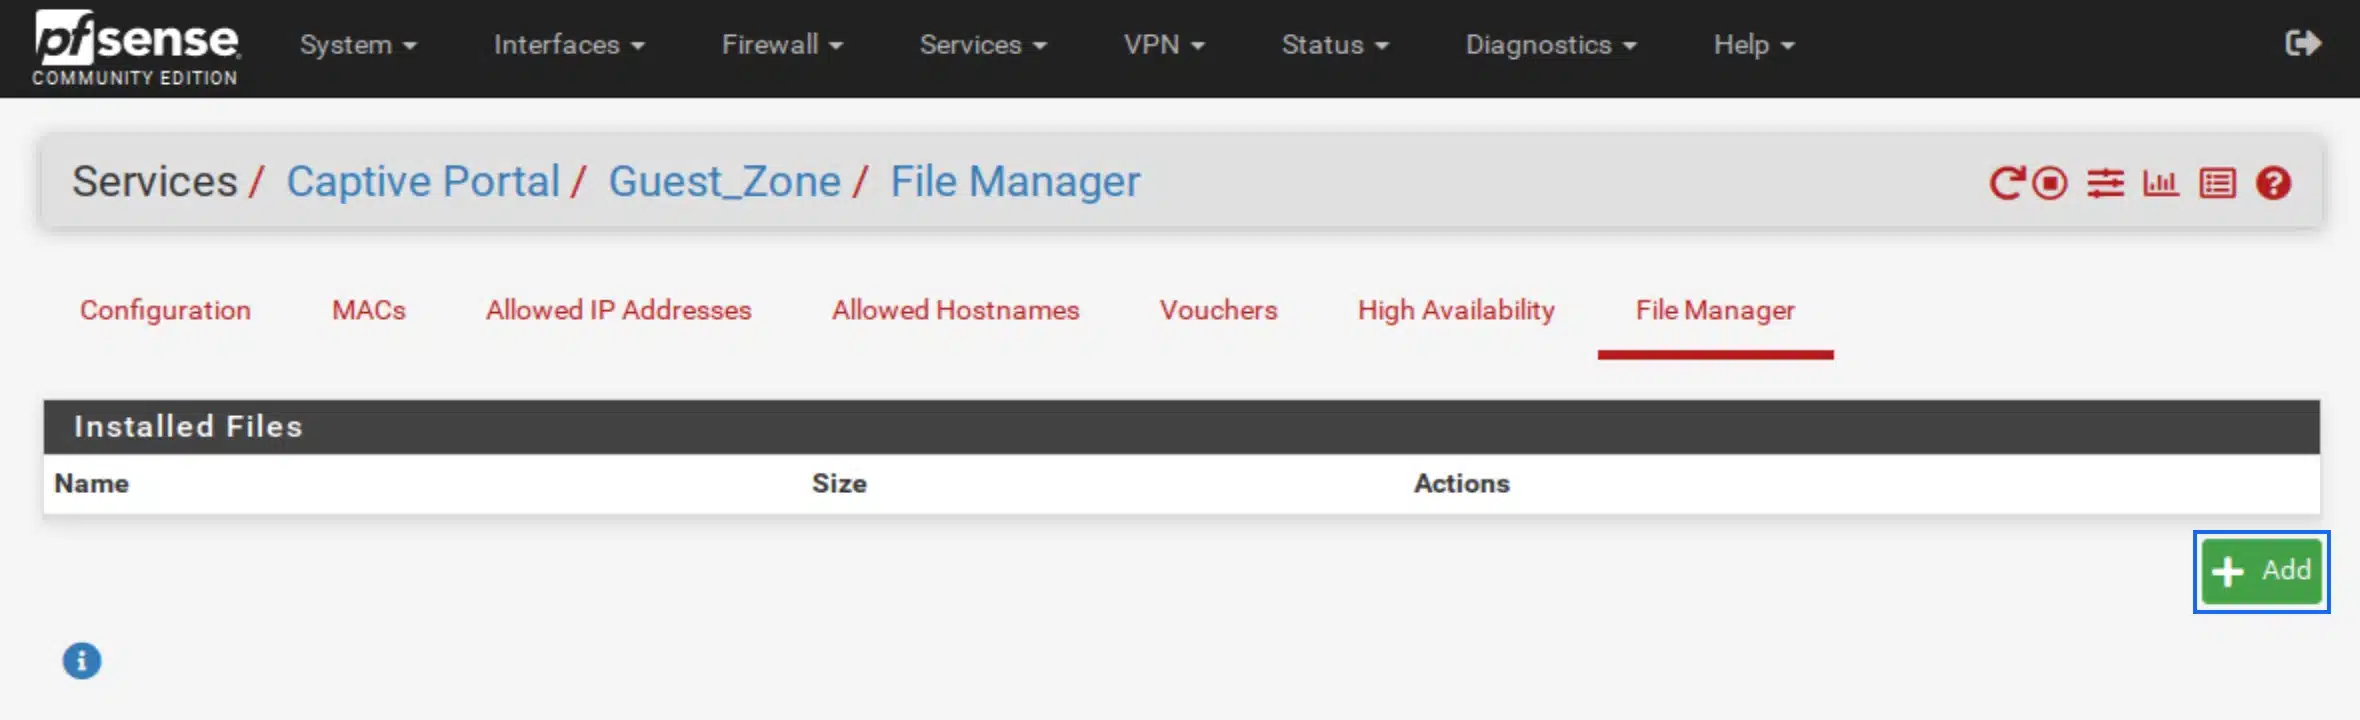 pfSense - Captive Portal - File Manager Tab - Click Add